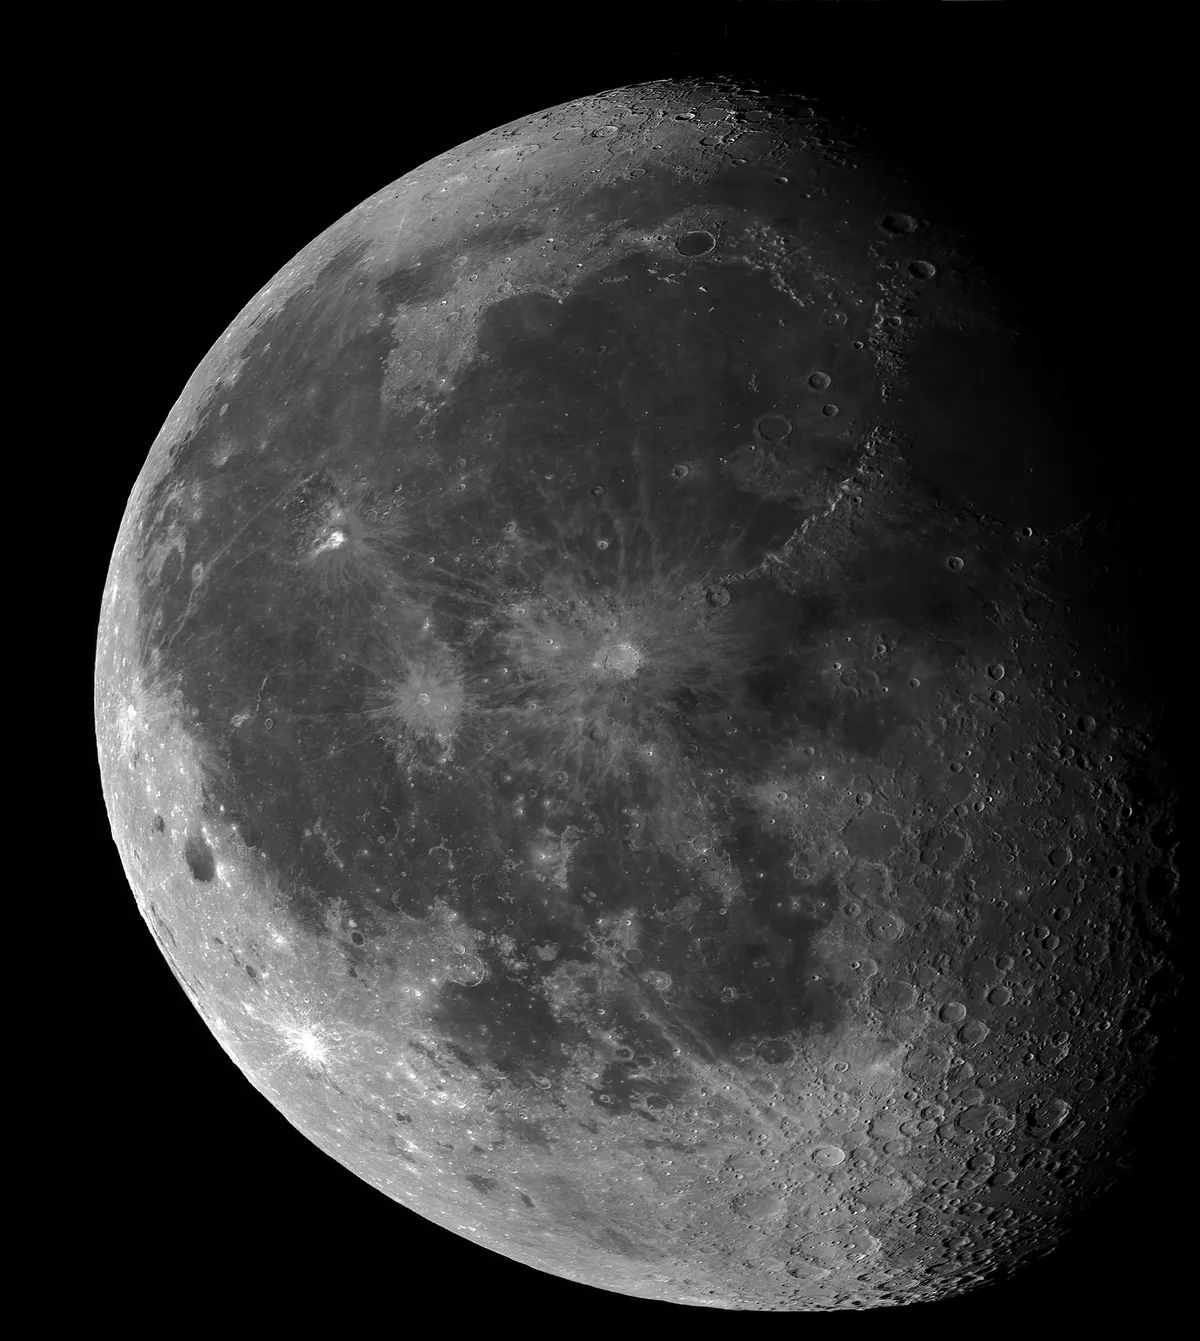 52 Panel Moon Mosaic by Duncan Healey, Glasgow, UK. Equipment: C9.25, DMK camera.